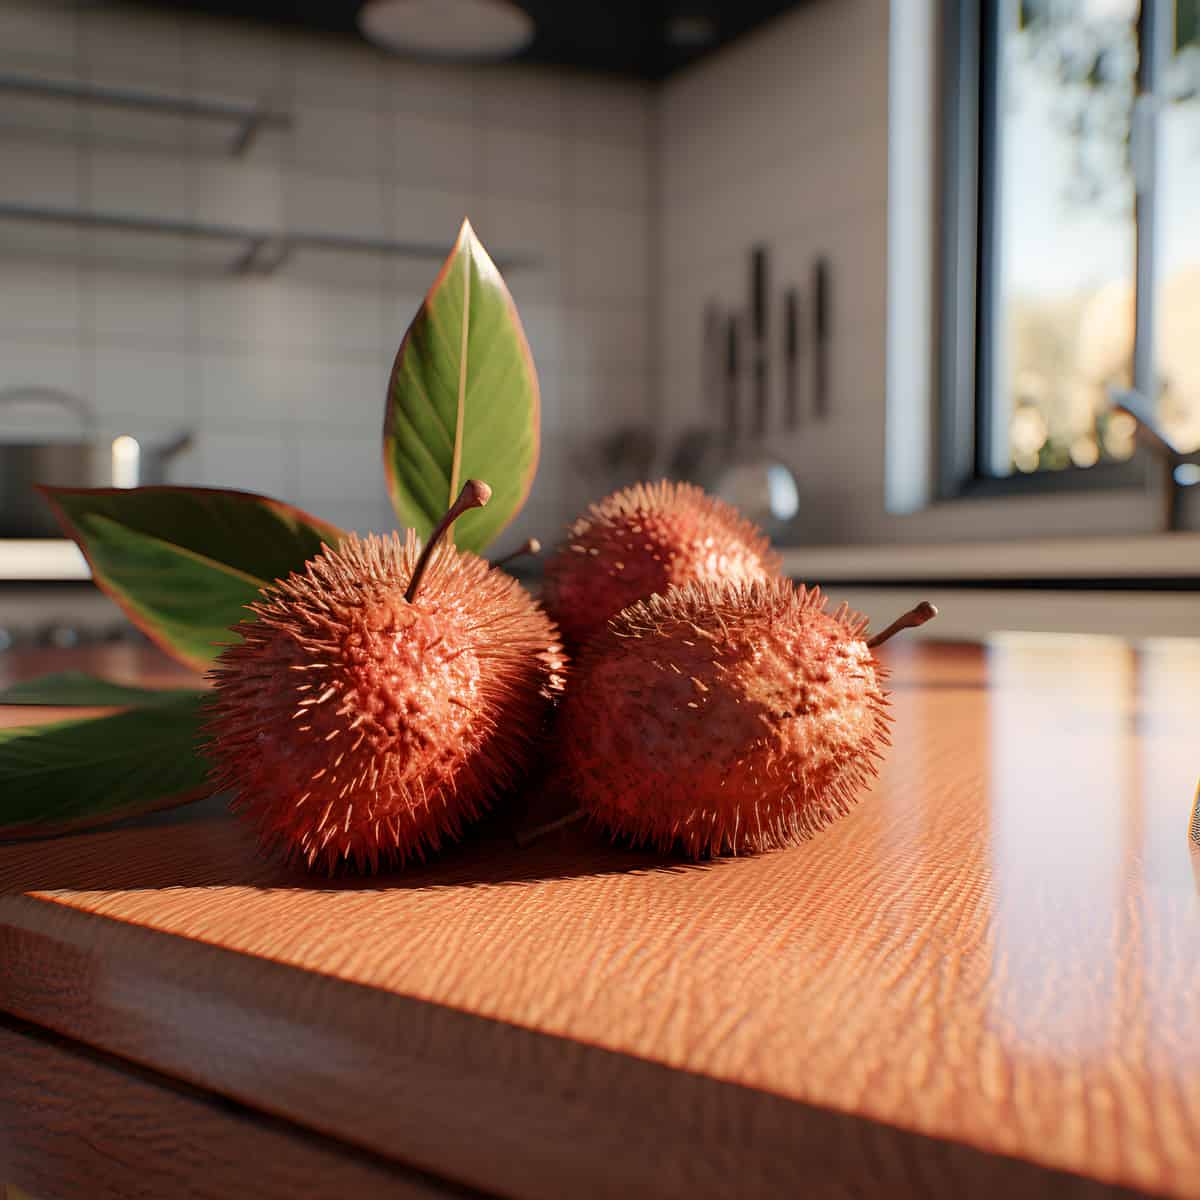 Marang Fruit on a kitchen counter